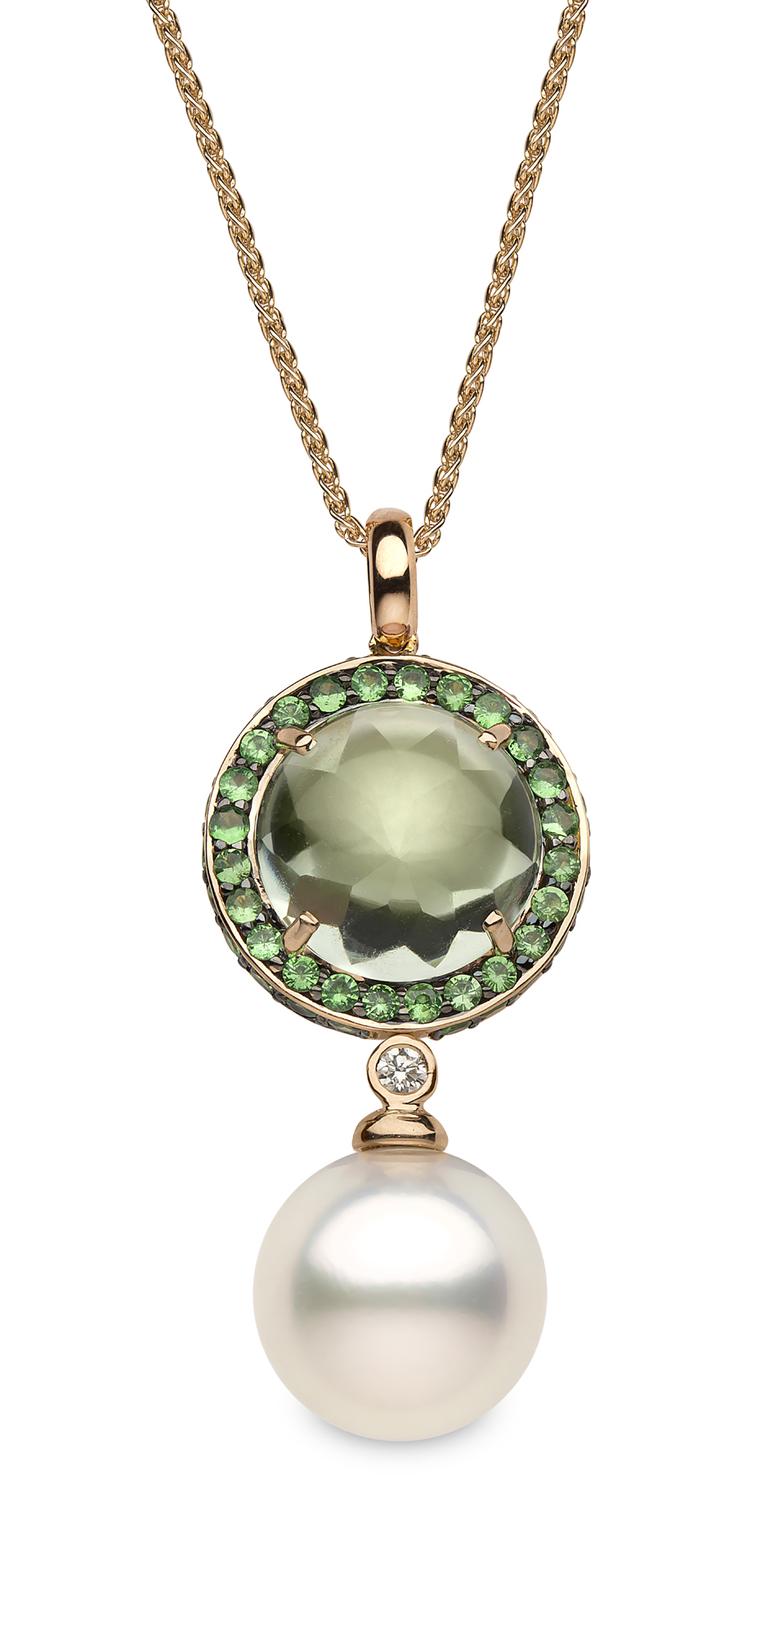 Yoko London rose gold pendant featuring a white Australian South Sea pearl, green amethysts, a central tsavorite and diamonds